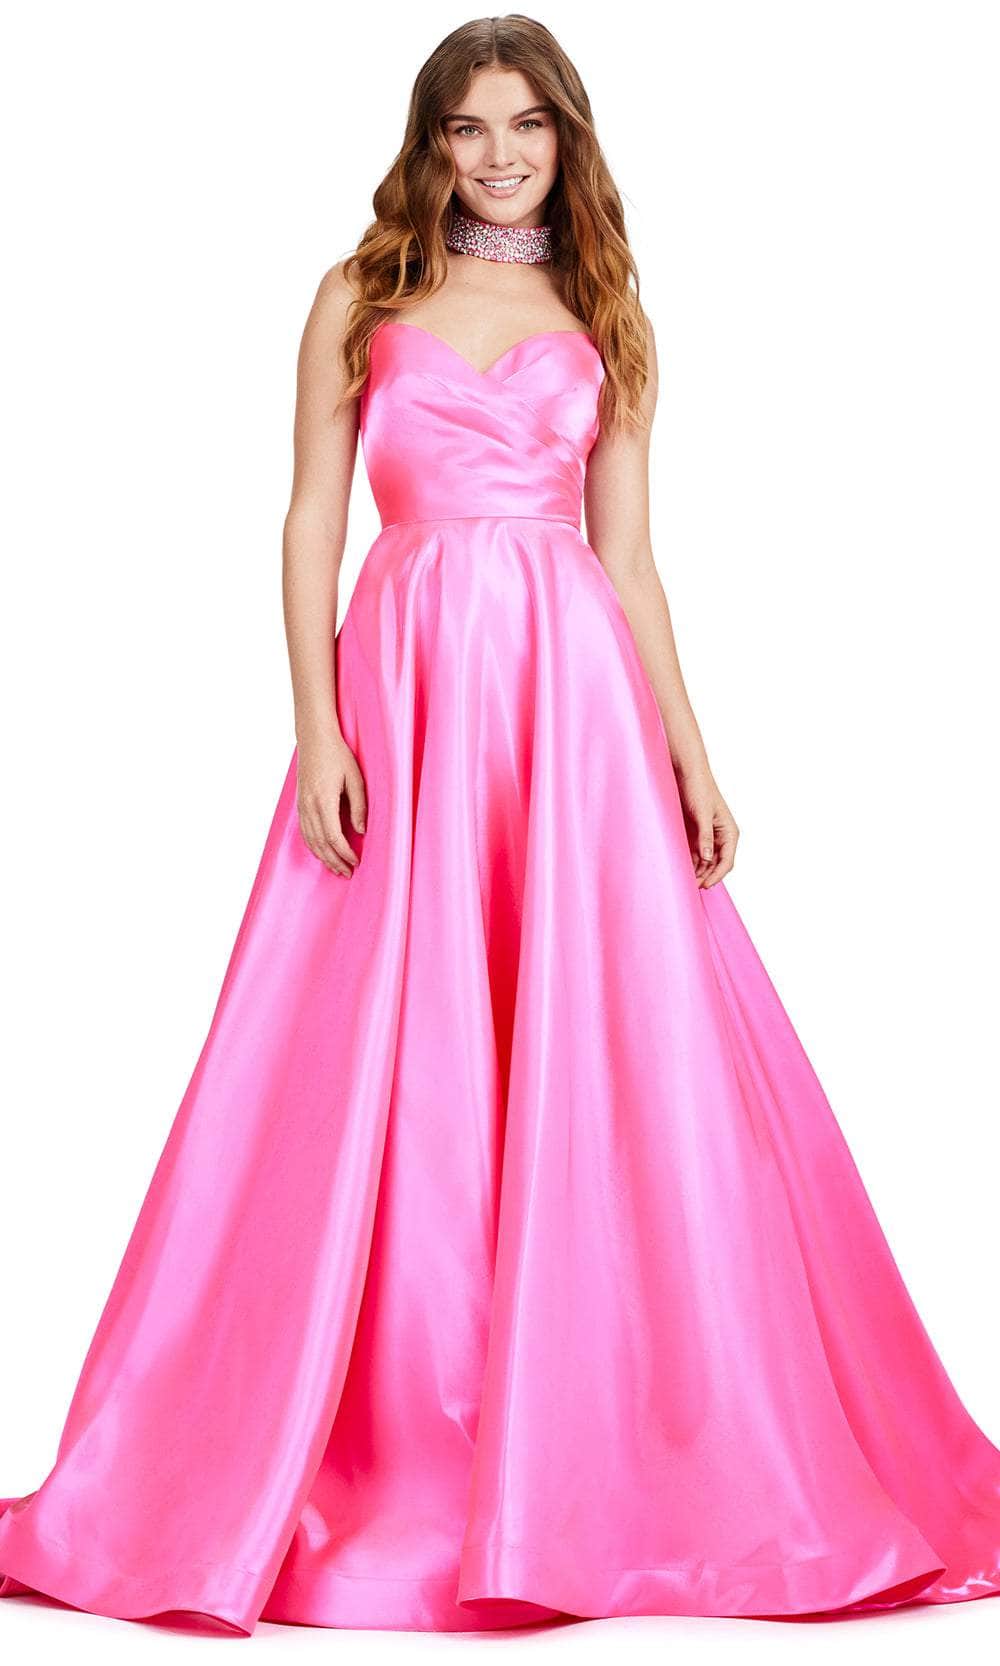 Image of Ashley Lauren 11473 - Choker Style Satin Prom Dress